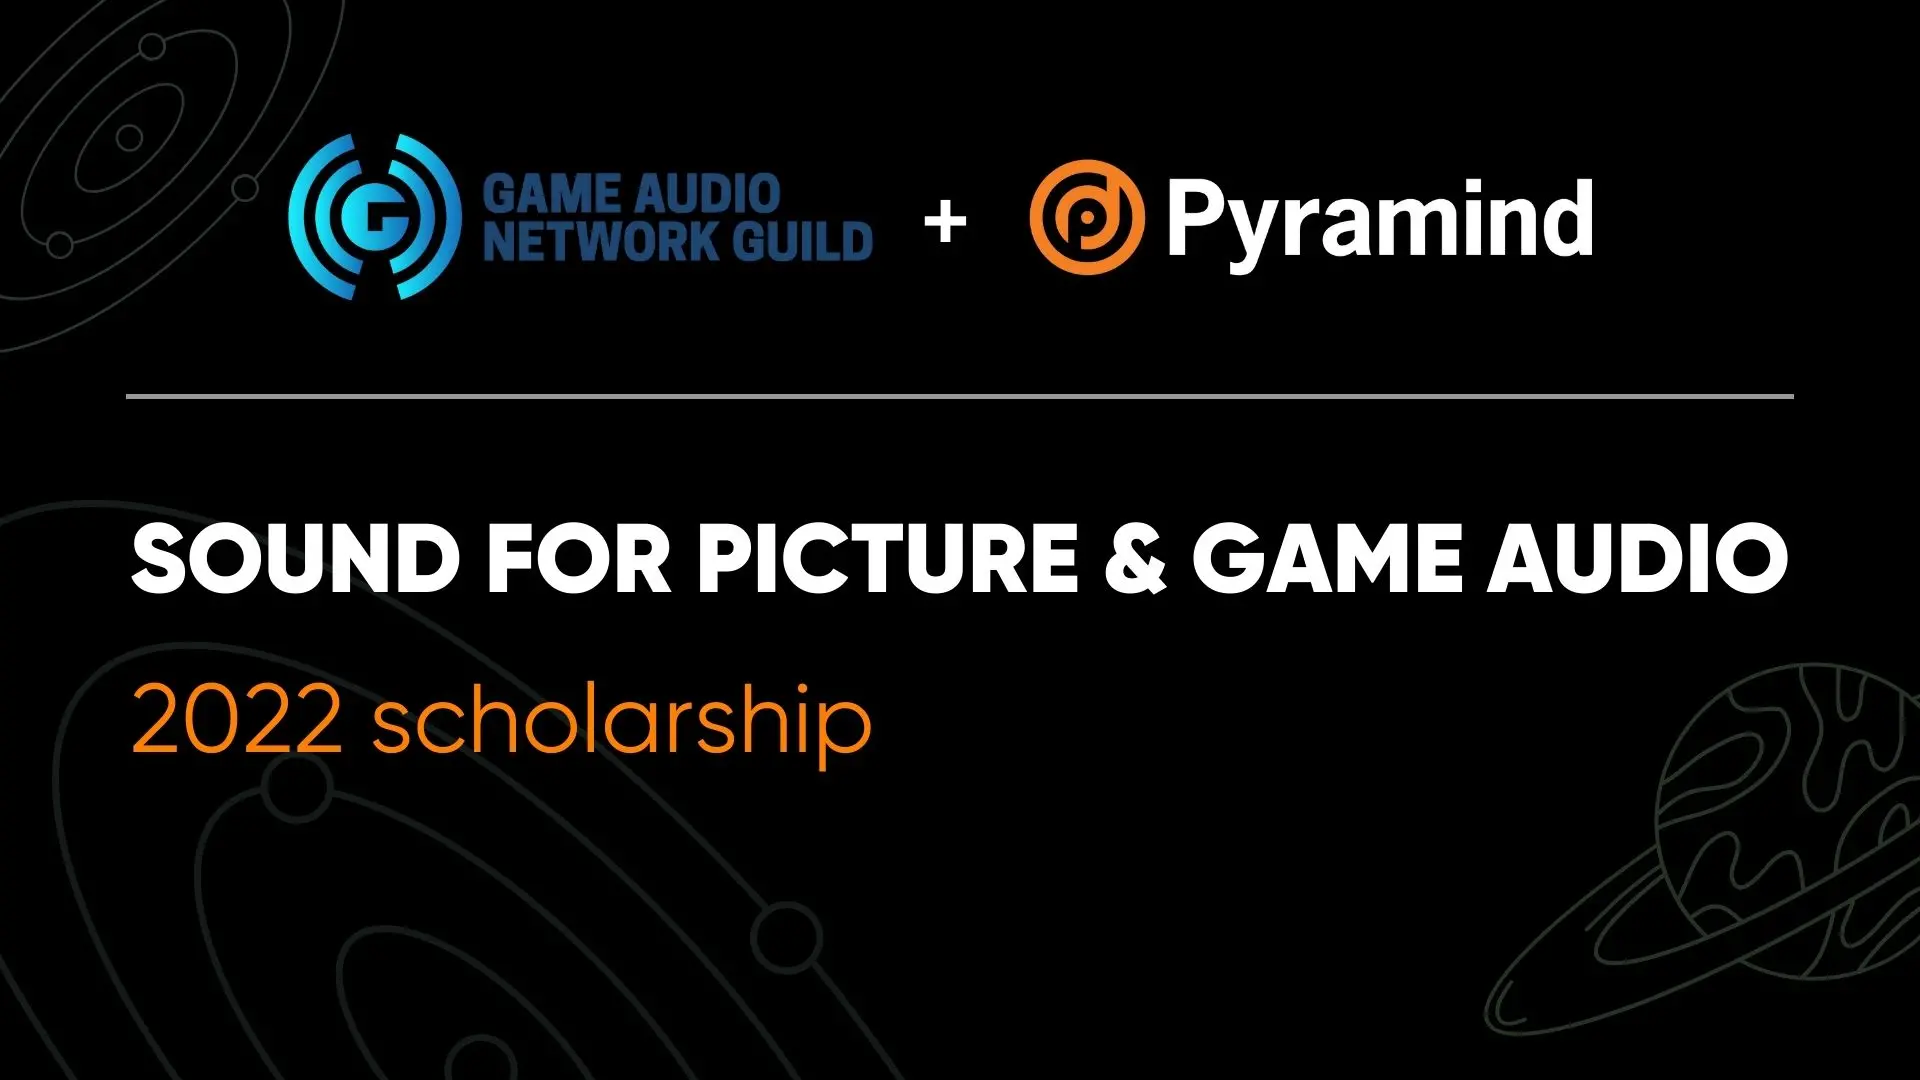 GANG + Pyramind Scholarship 2022